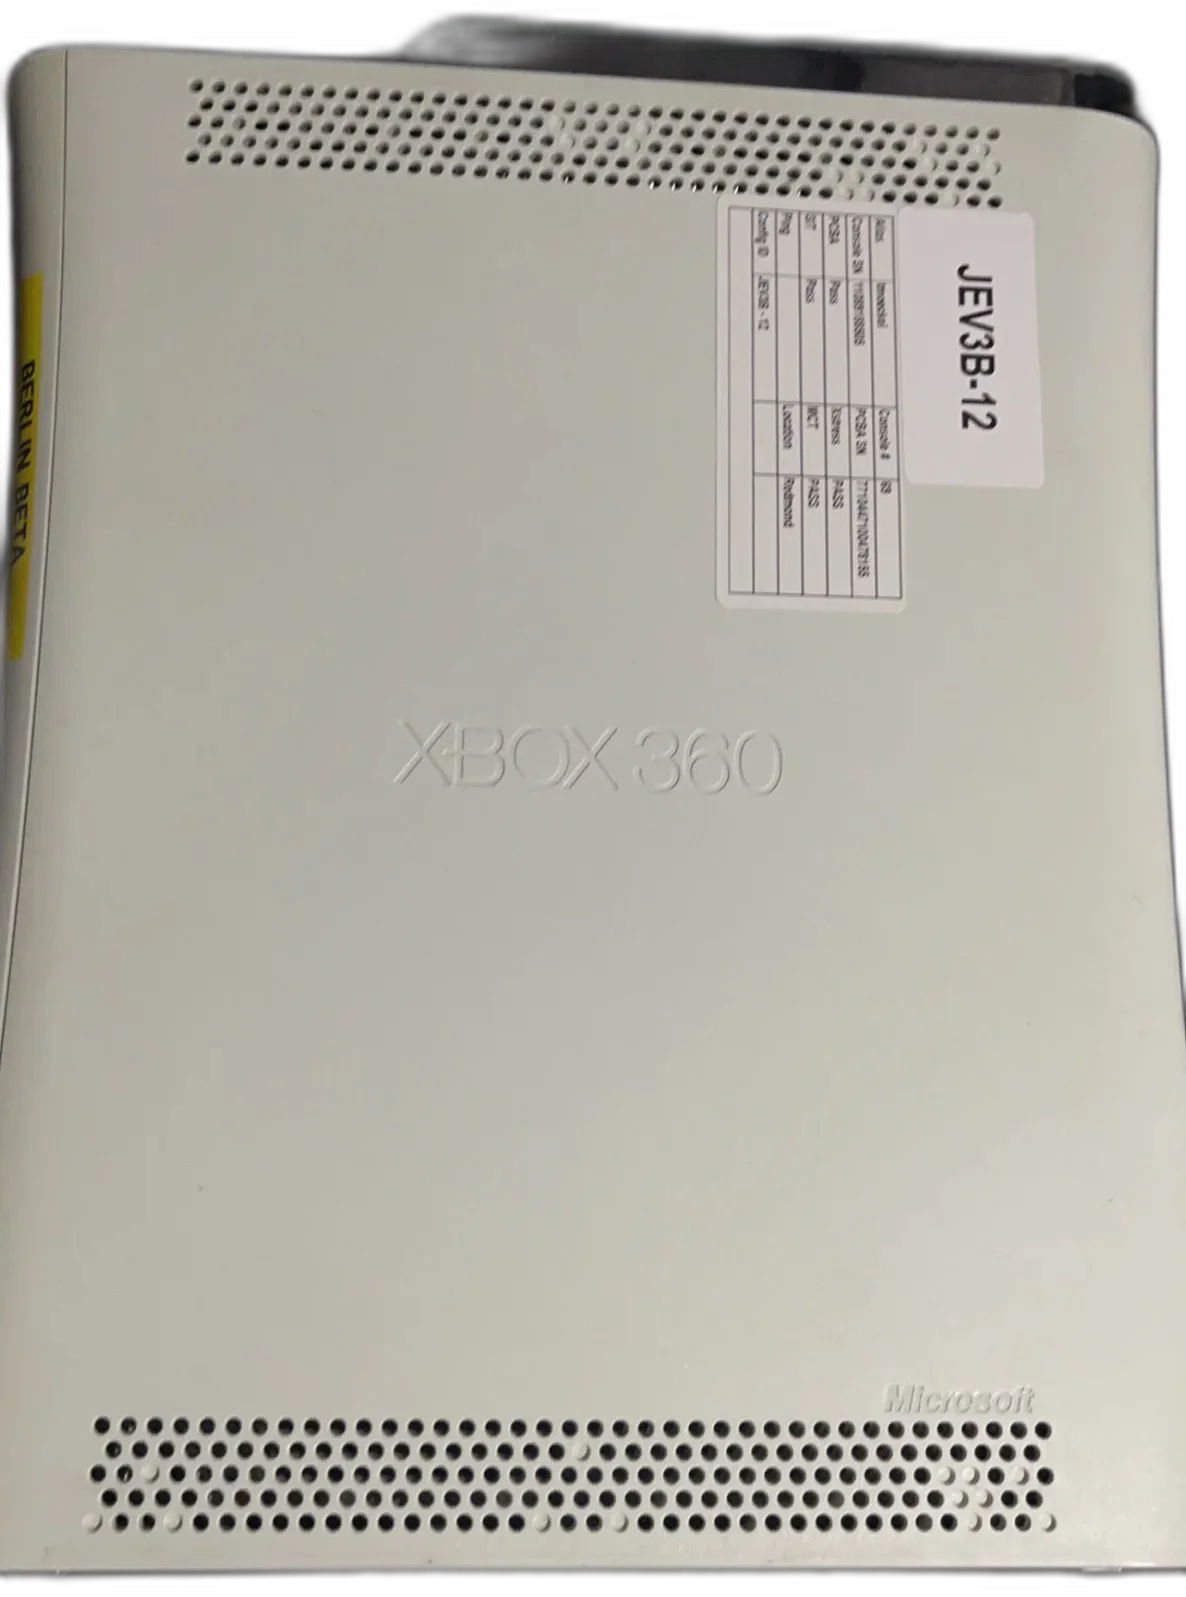  Microsoft Xbox 360 Jasper JEV3B-12 Console